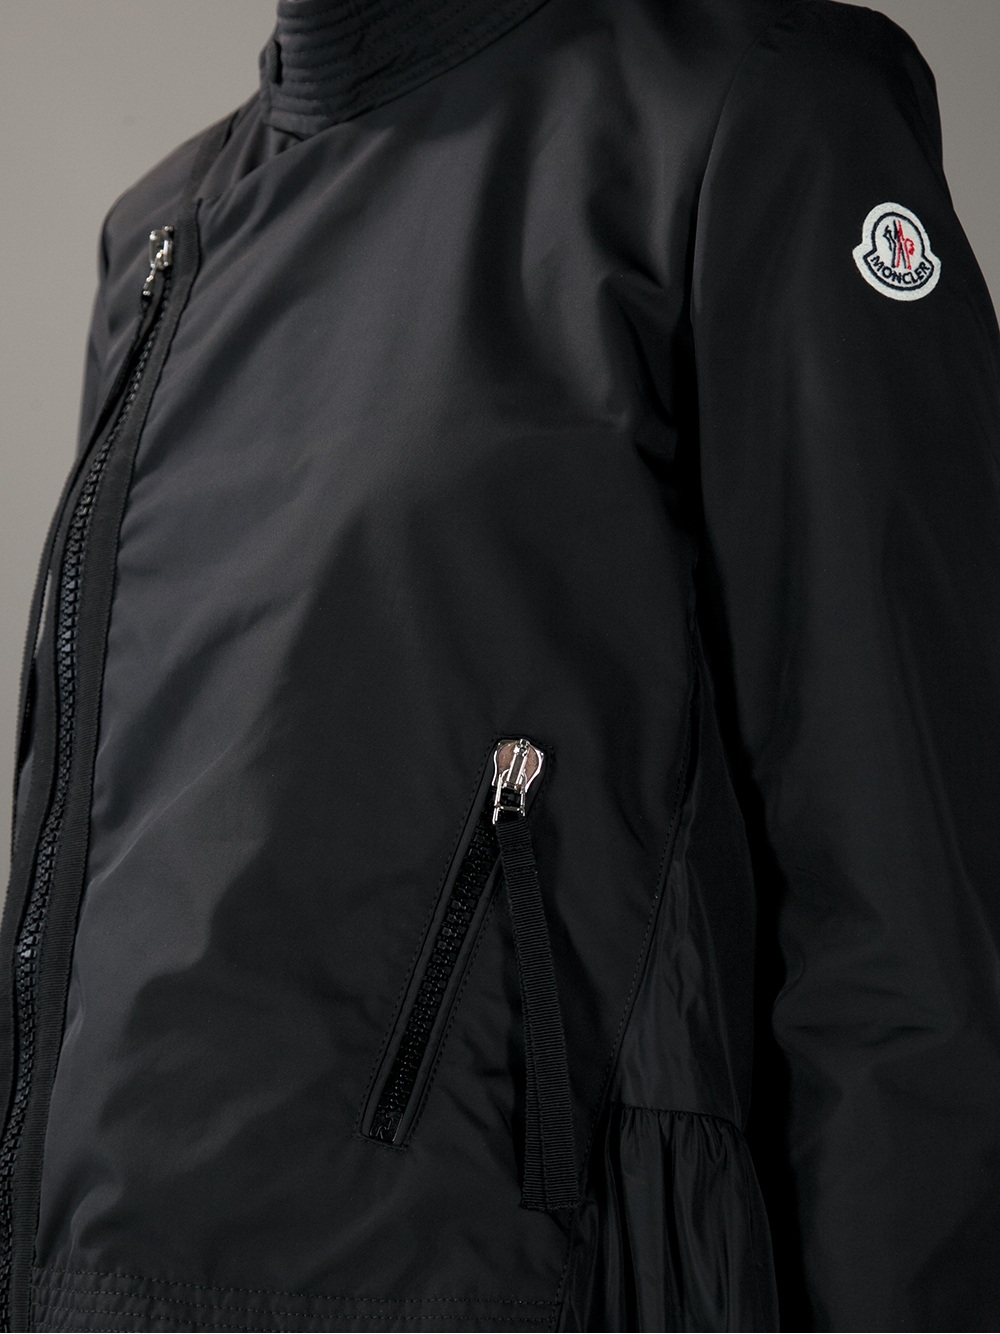 Moncler Sport Frill Jacket in Black - Lyst